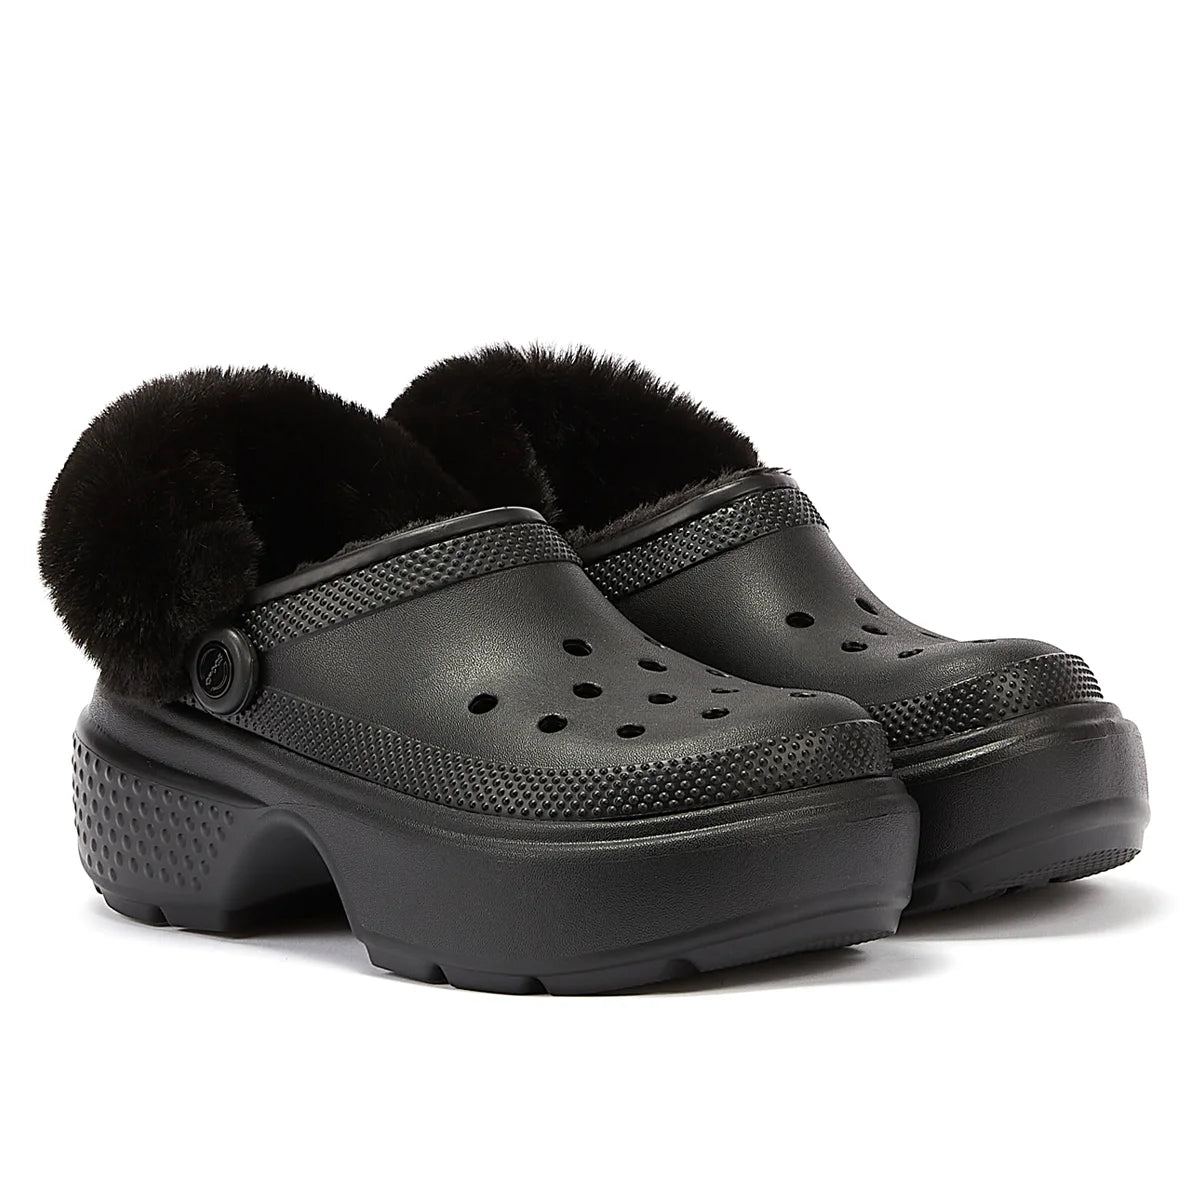 Crocs Stomp Lined Clog Women’s Black Sandals